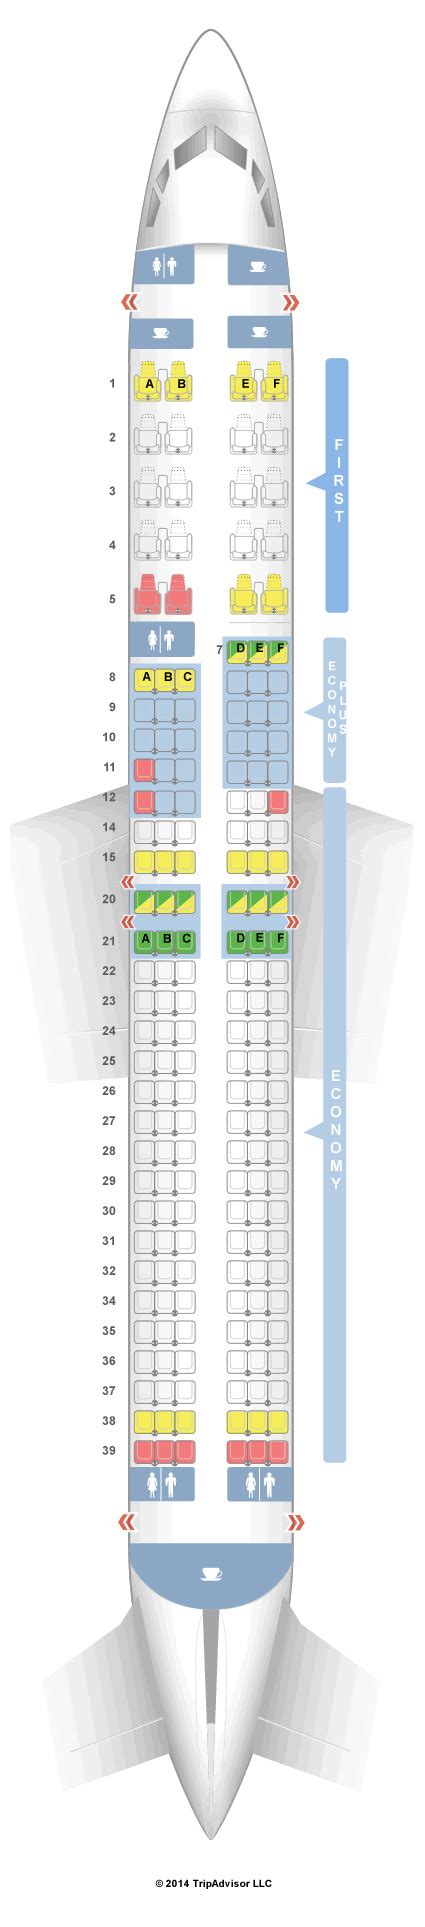 united 739 seating chart